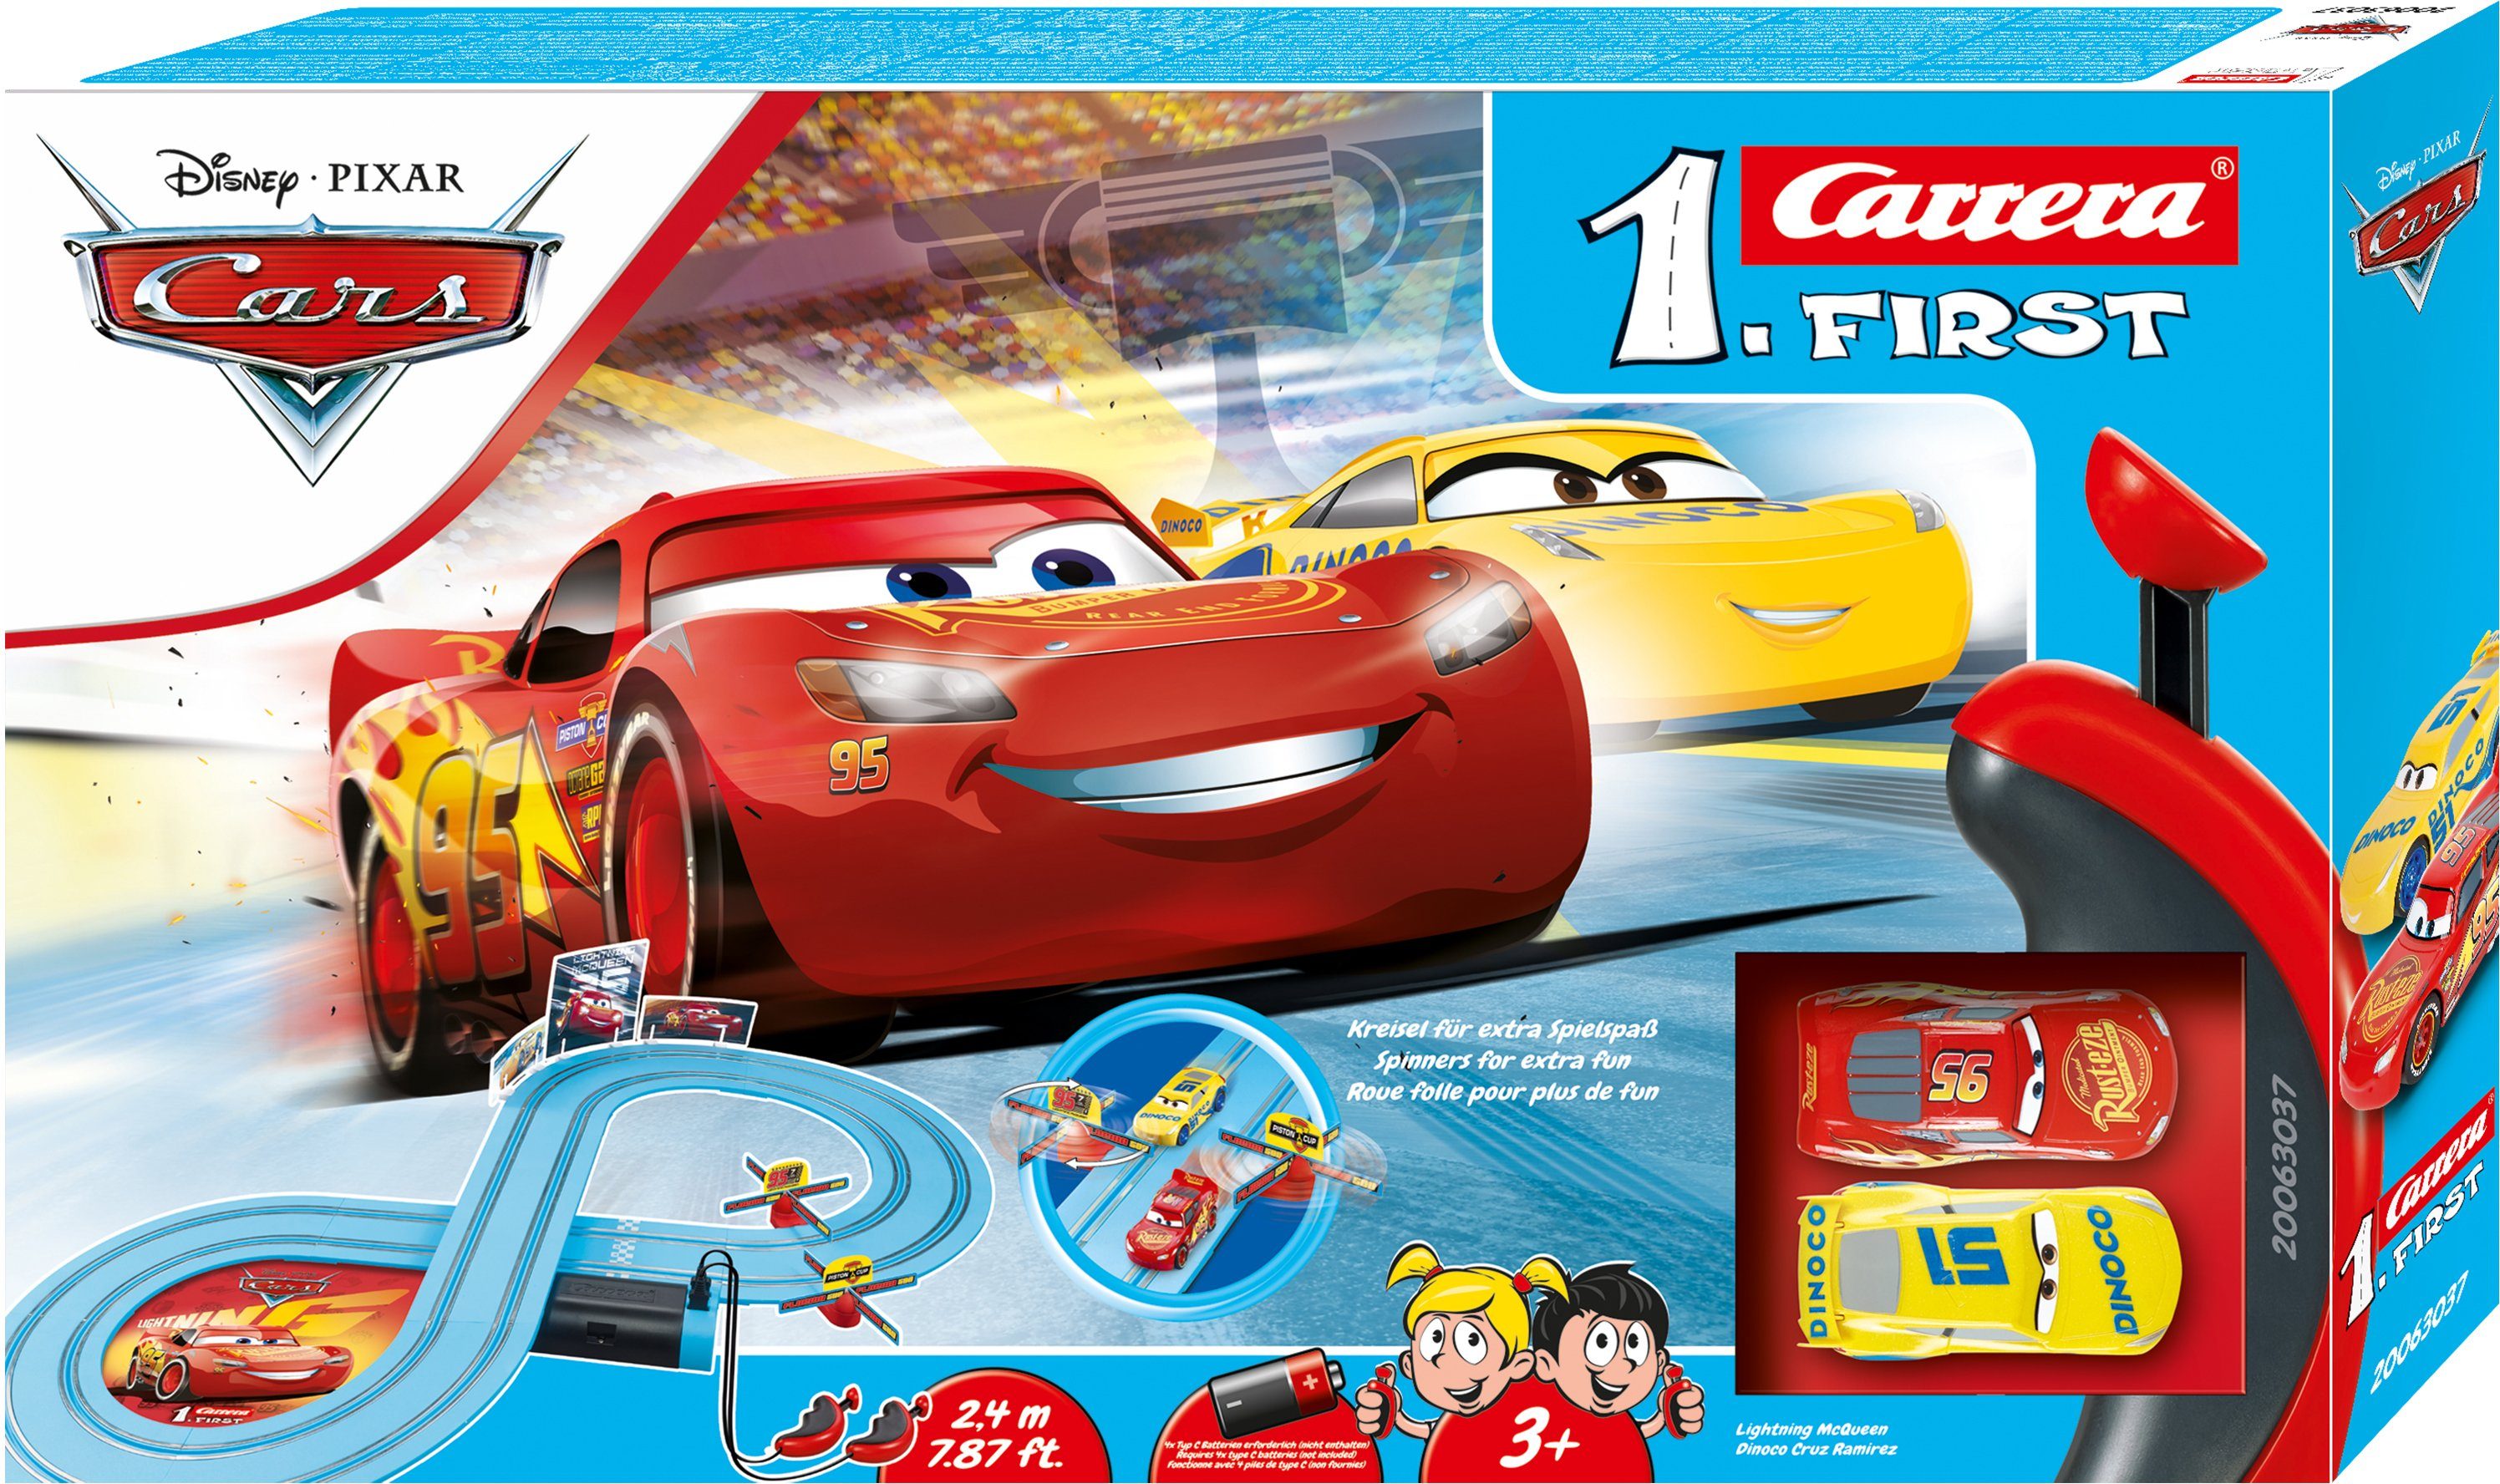 Carrera® Autorennbahn Carrera First Disney Pixar Cars - Friends Race